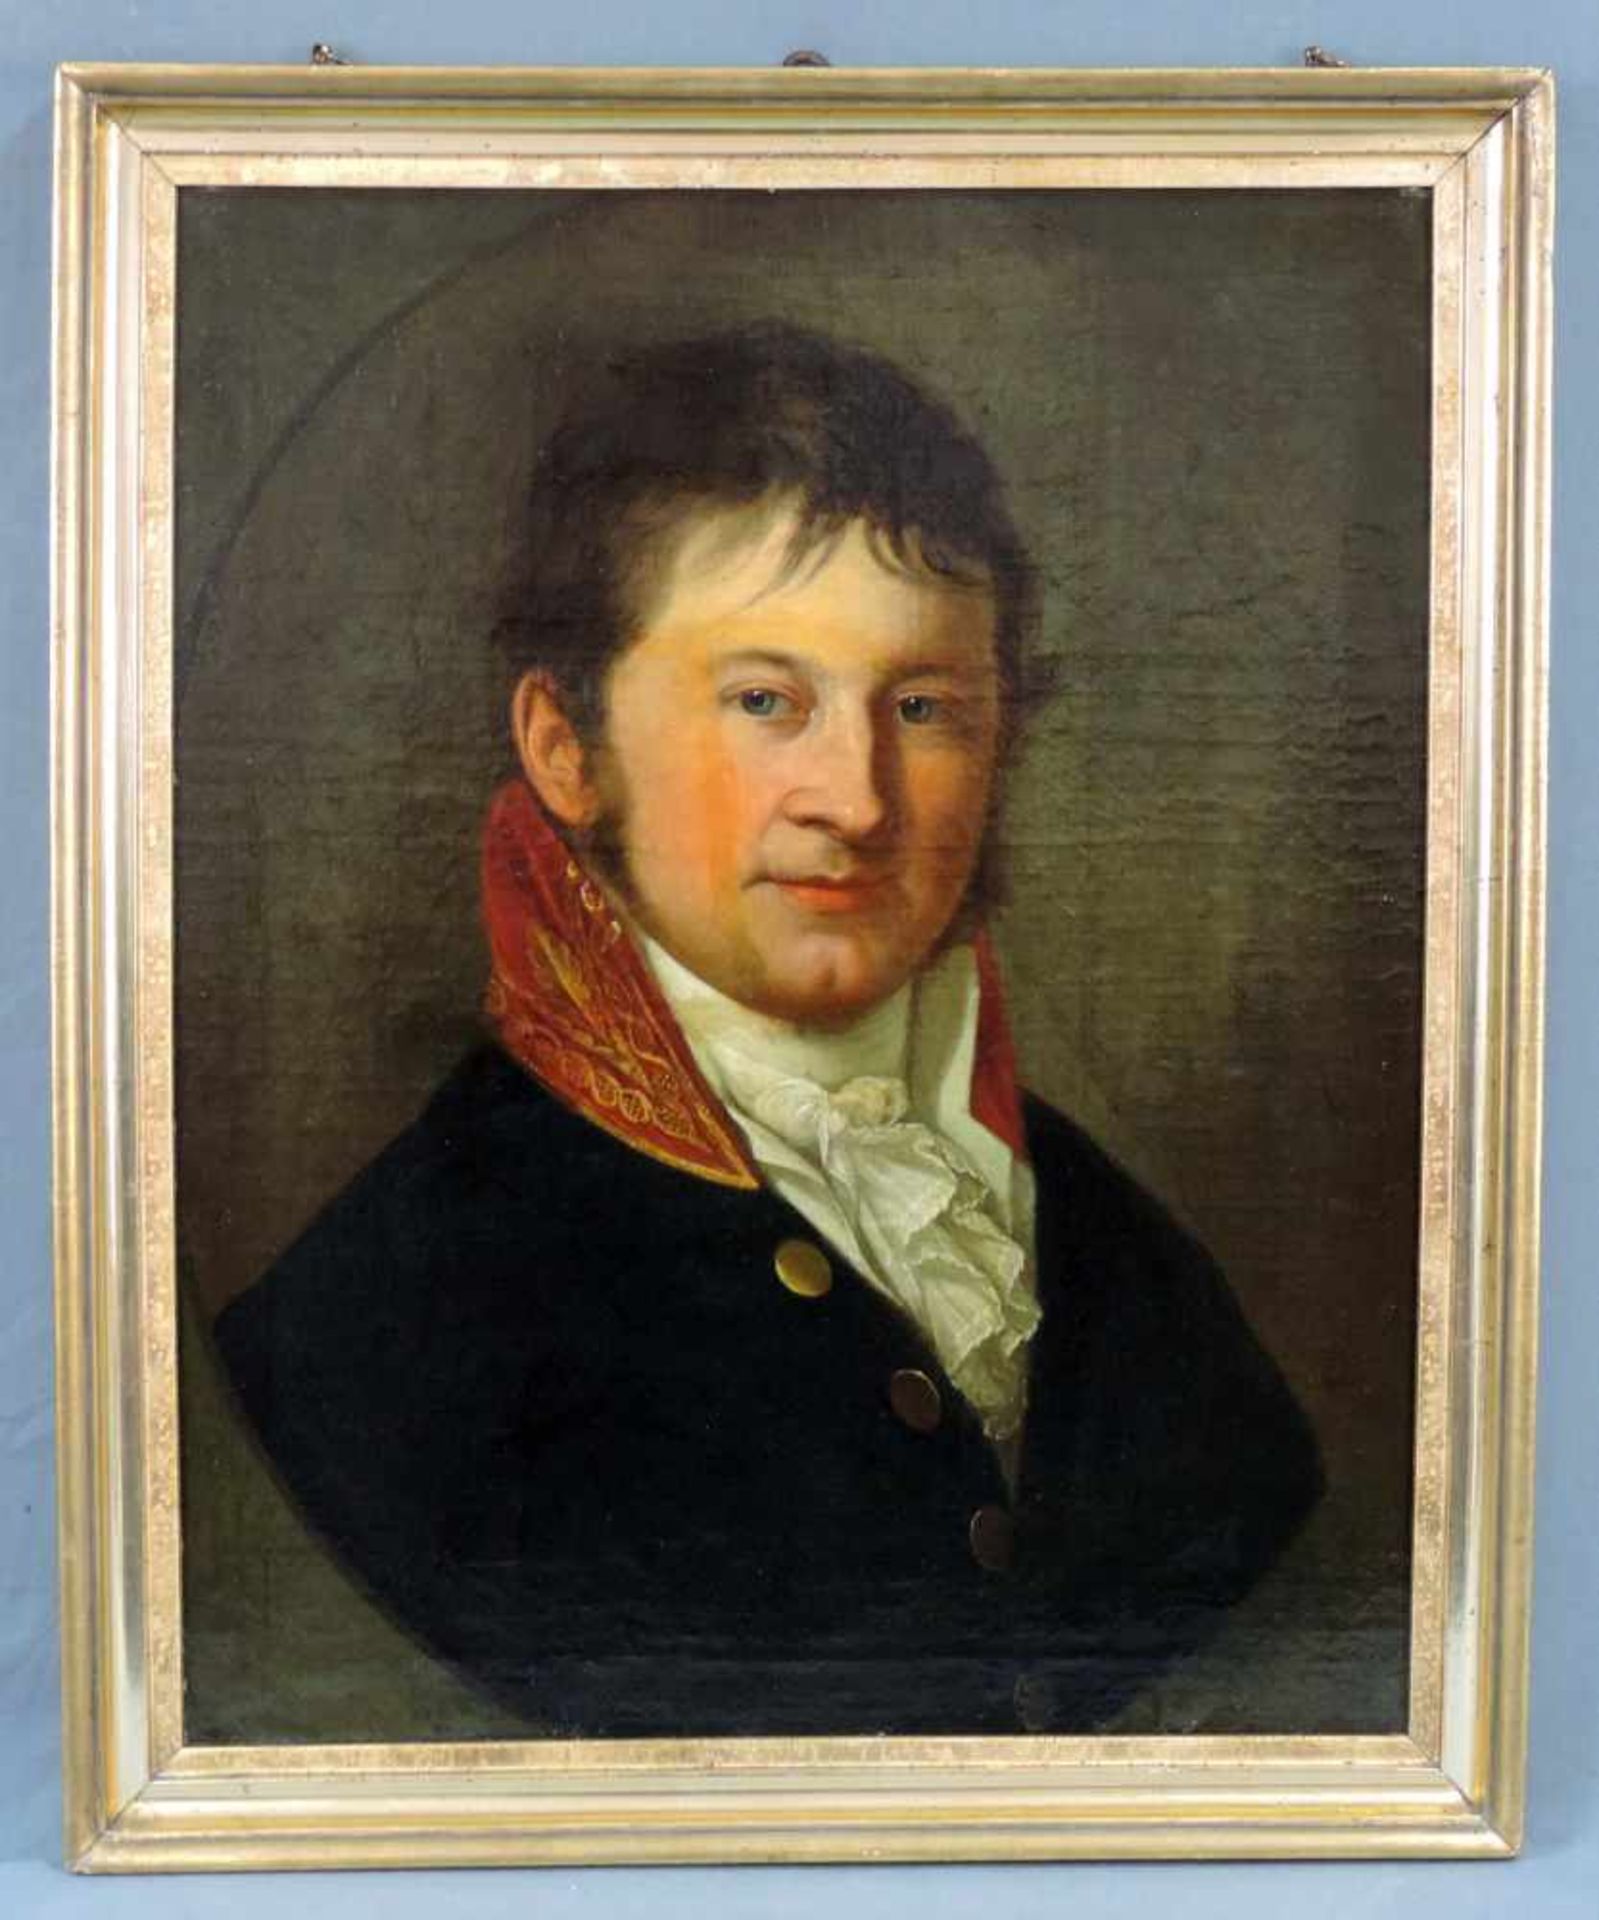 UNSIGNIERT (XVIII - XIX). Portrait des Gerichtsrats Richter. 60 cm x 49 cm. Gemälde. Öl auf